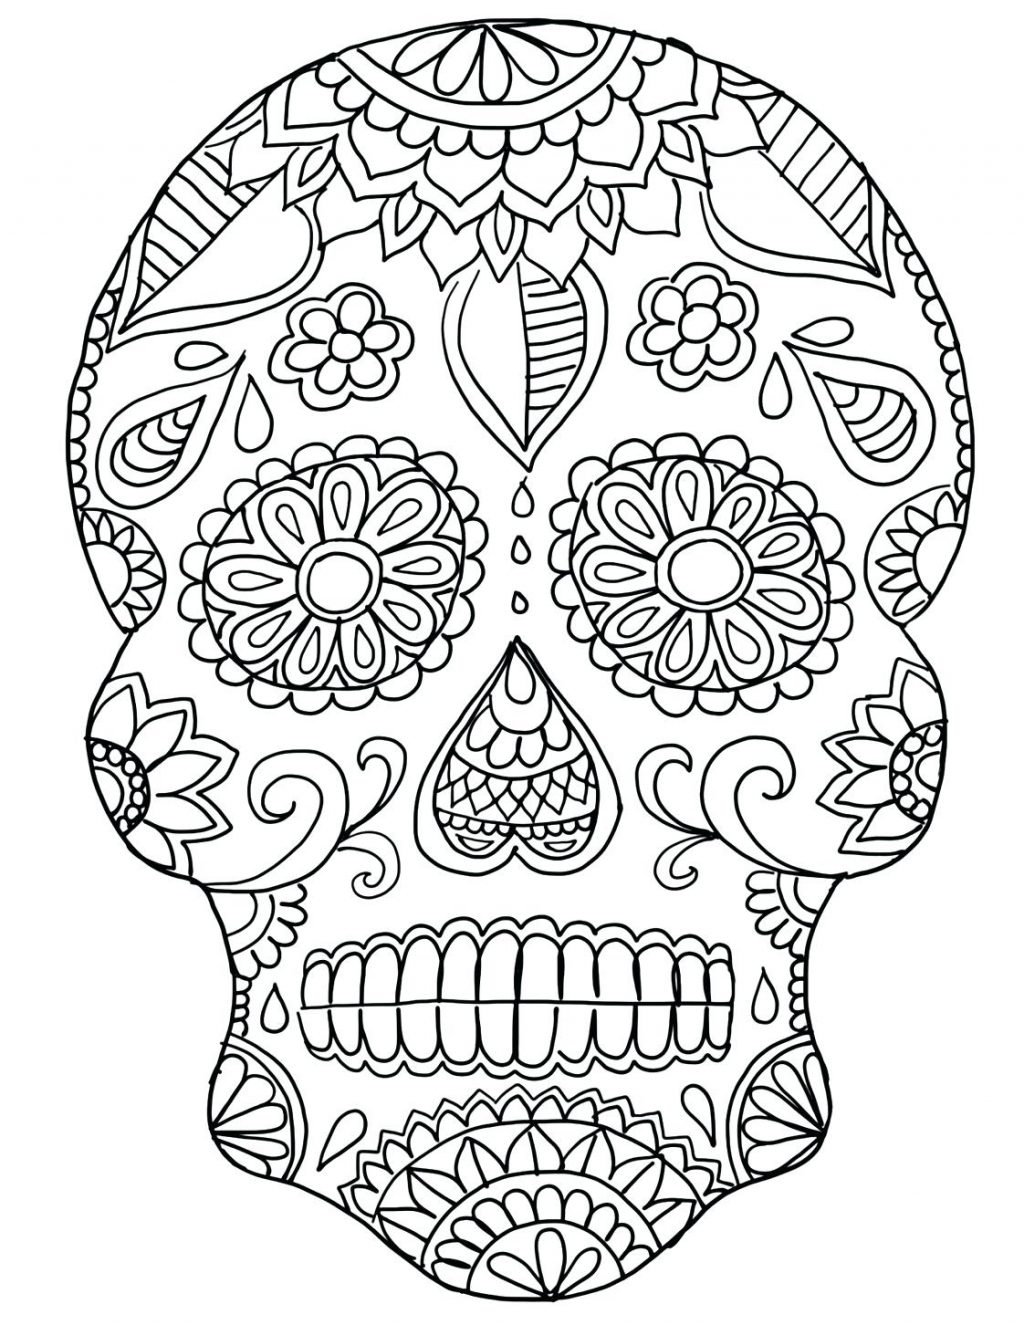 Sugar Skull Coloring Pages at GetDrawings Free download